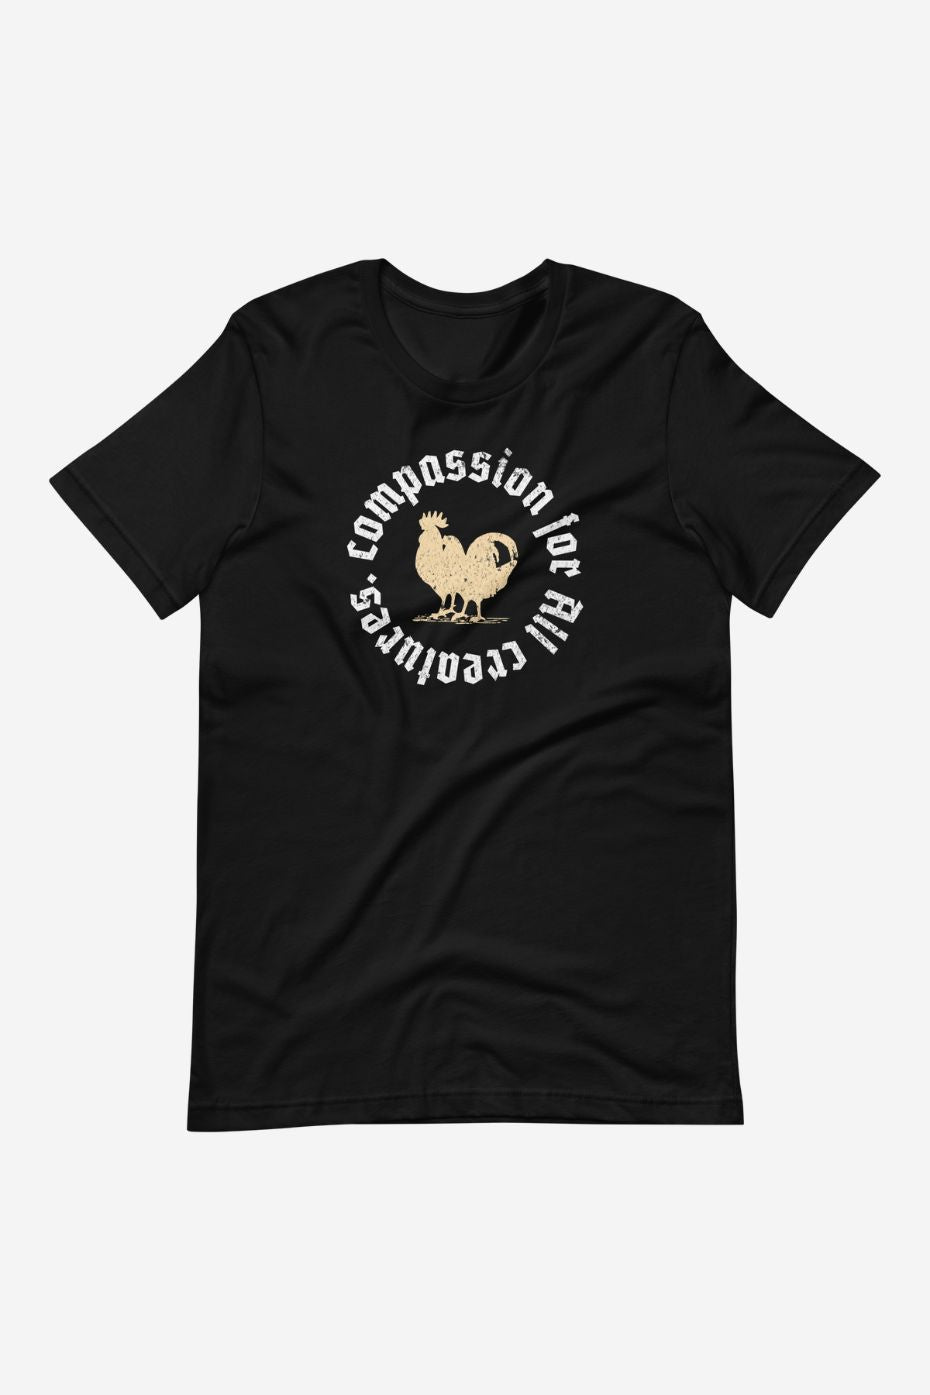 Compassion For All Creatures - Unisex vegan t-shirt